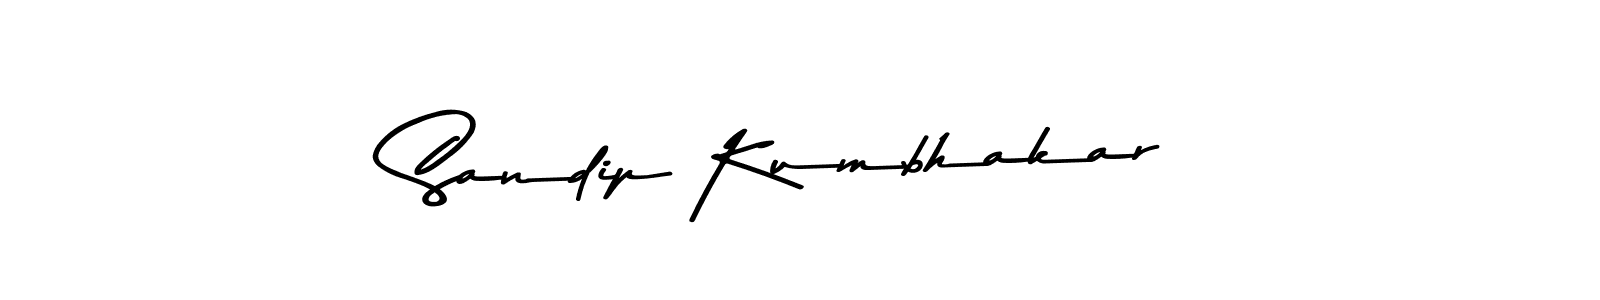 How to Draw Sandip Kumbhakar signature style? Asem Kandis PERSONAL USE is a latest design signature styles for name Sandip Kumbhakar. Sandip Kumbhakar signature style 9 images and pictures png